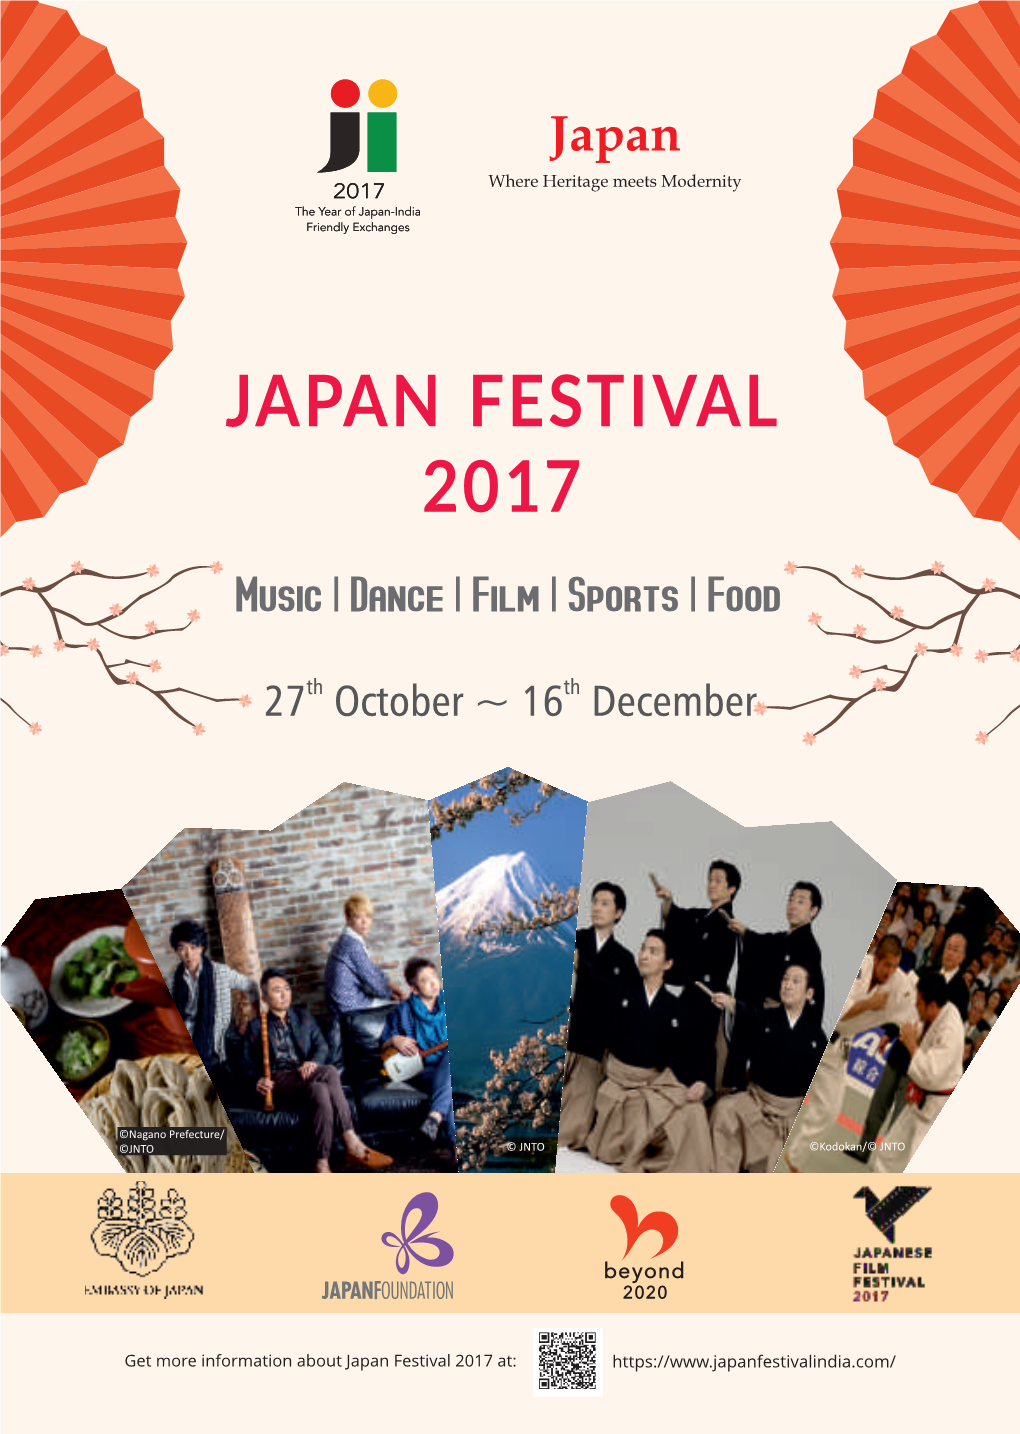 JAPAN FESTIVAL 2017 Music | Dance | Film | Sports | Food